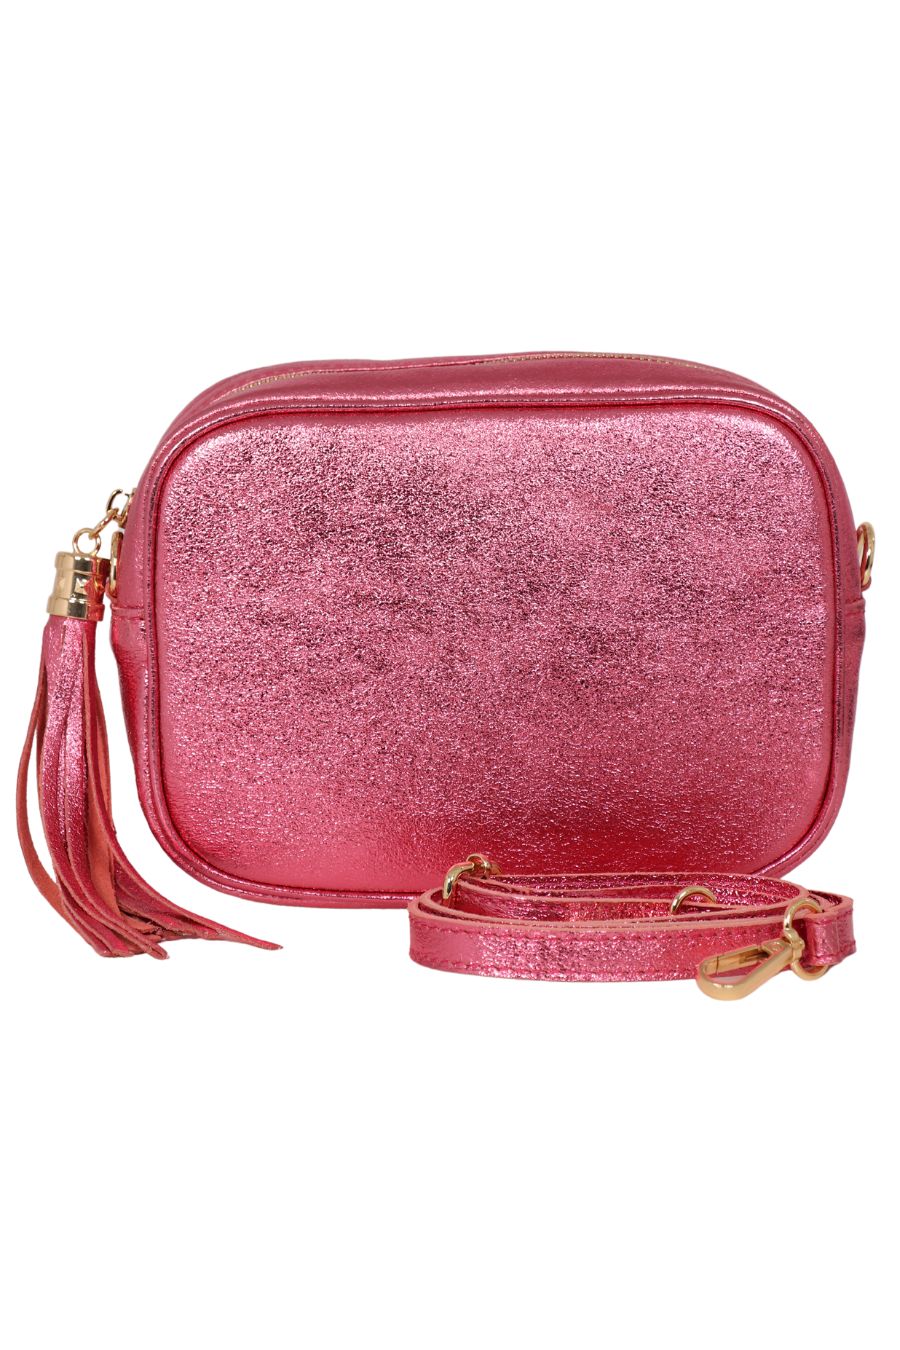 Metallic Hot Pink Genuine Italian Leather Camera Bag